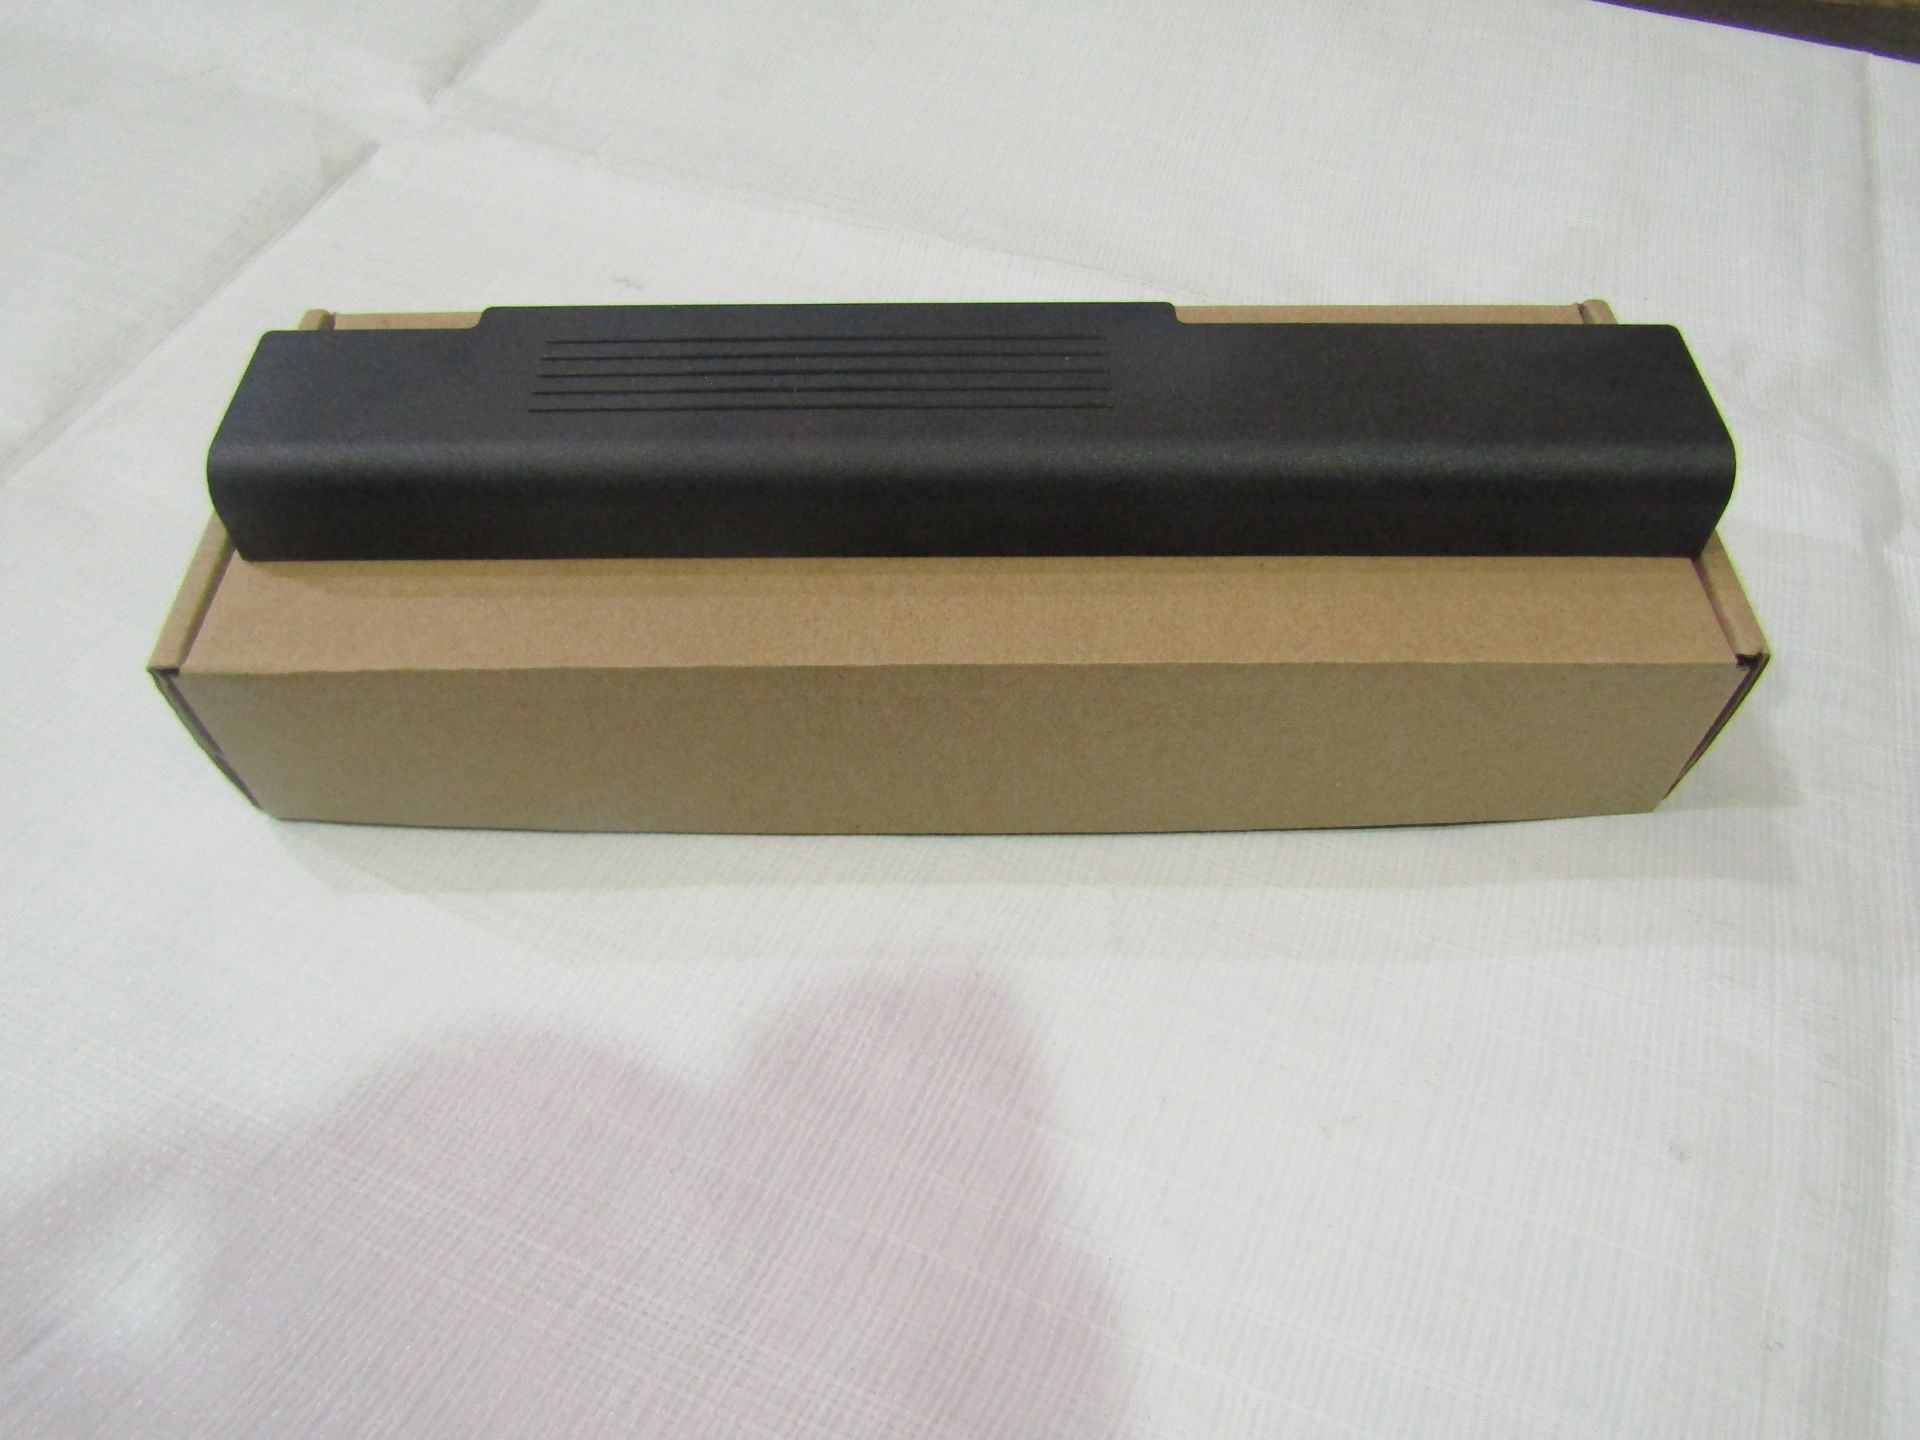 Hosowell Laptop Battery - Unused & Boxed.